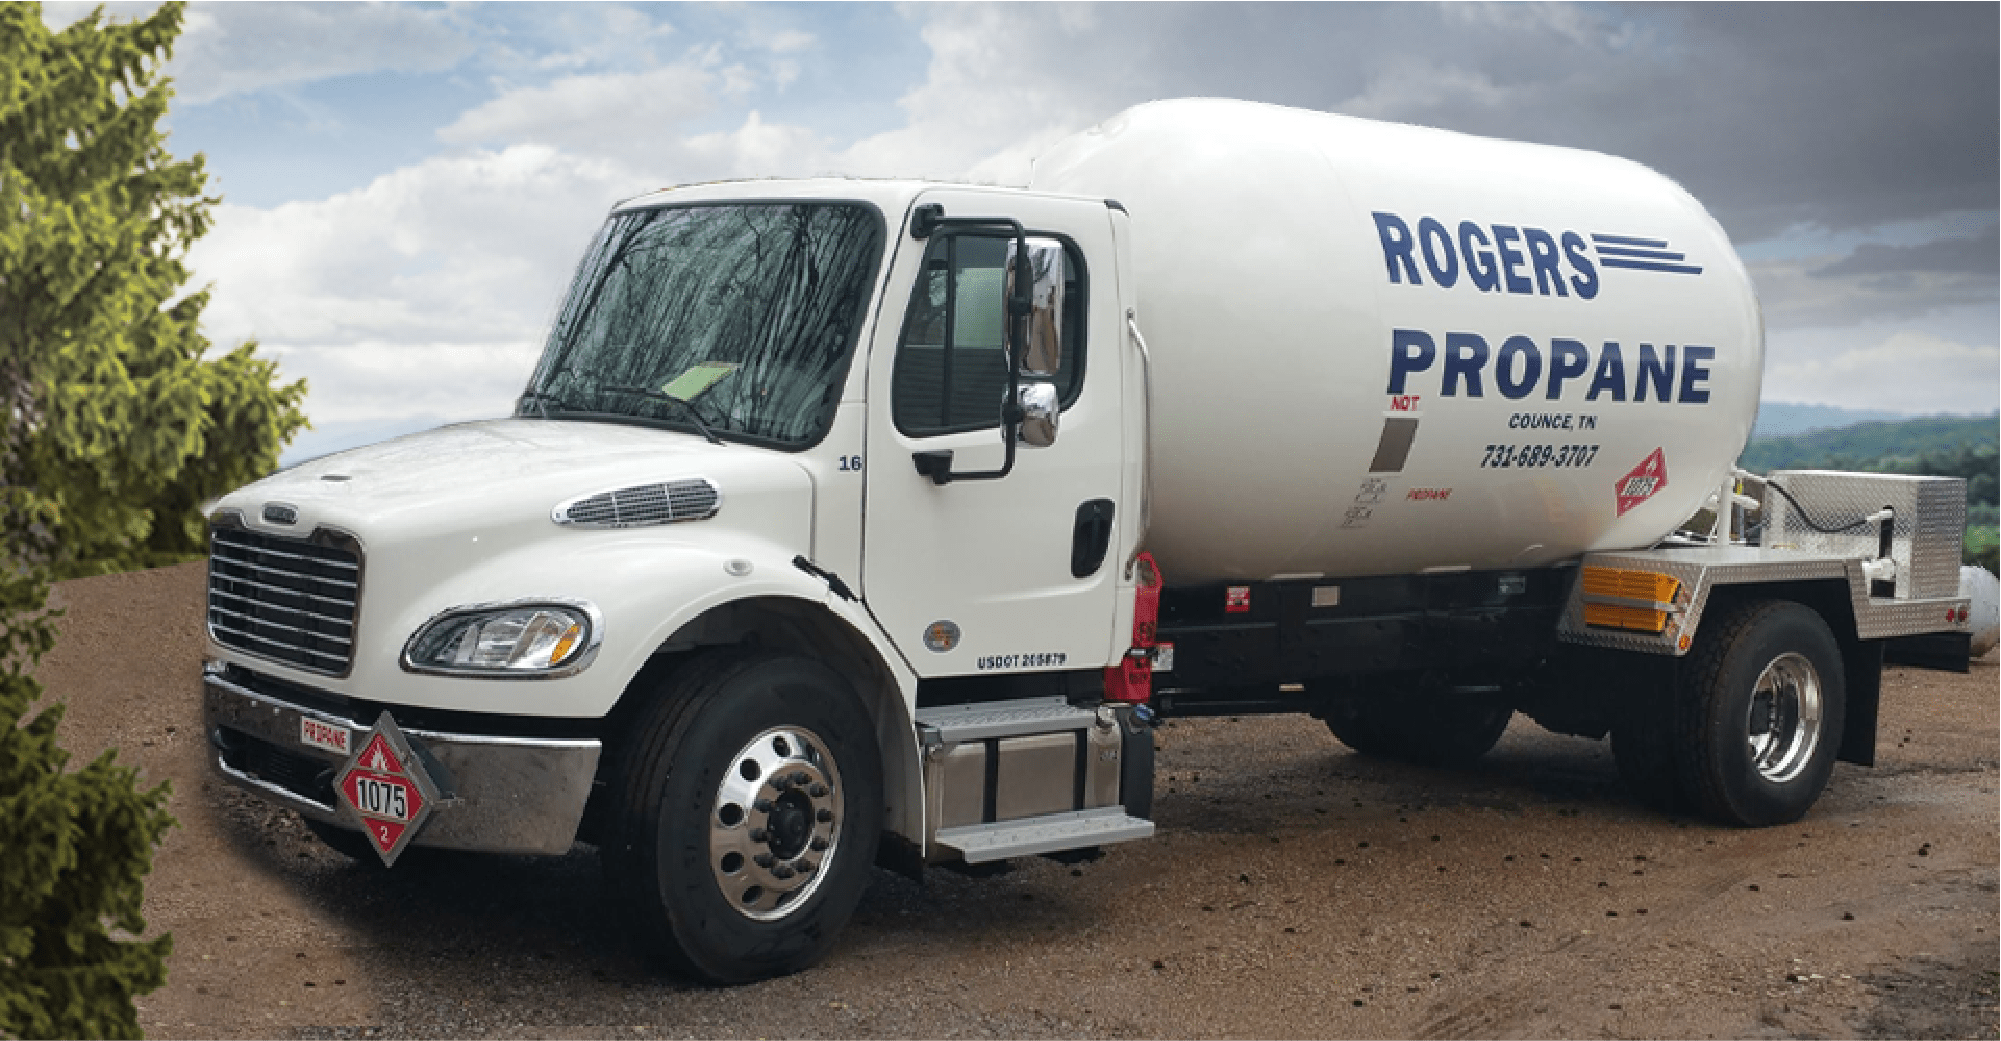 Rogers propane truck